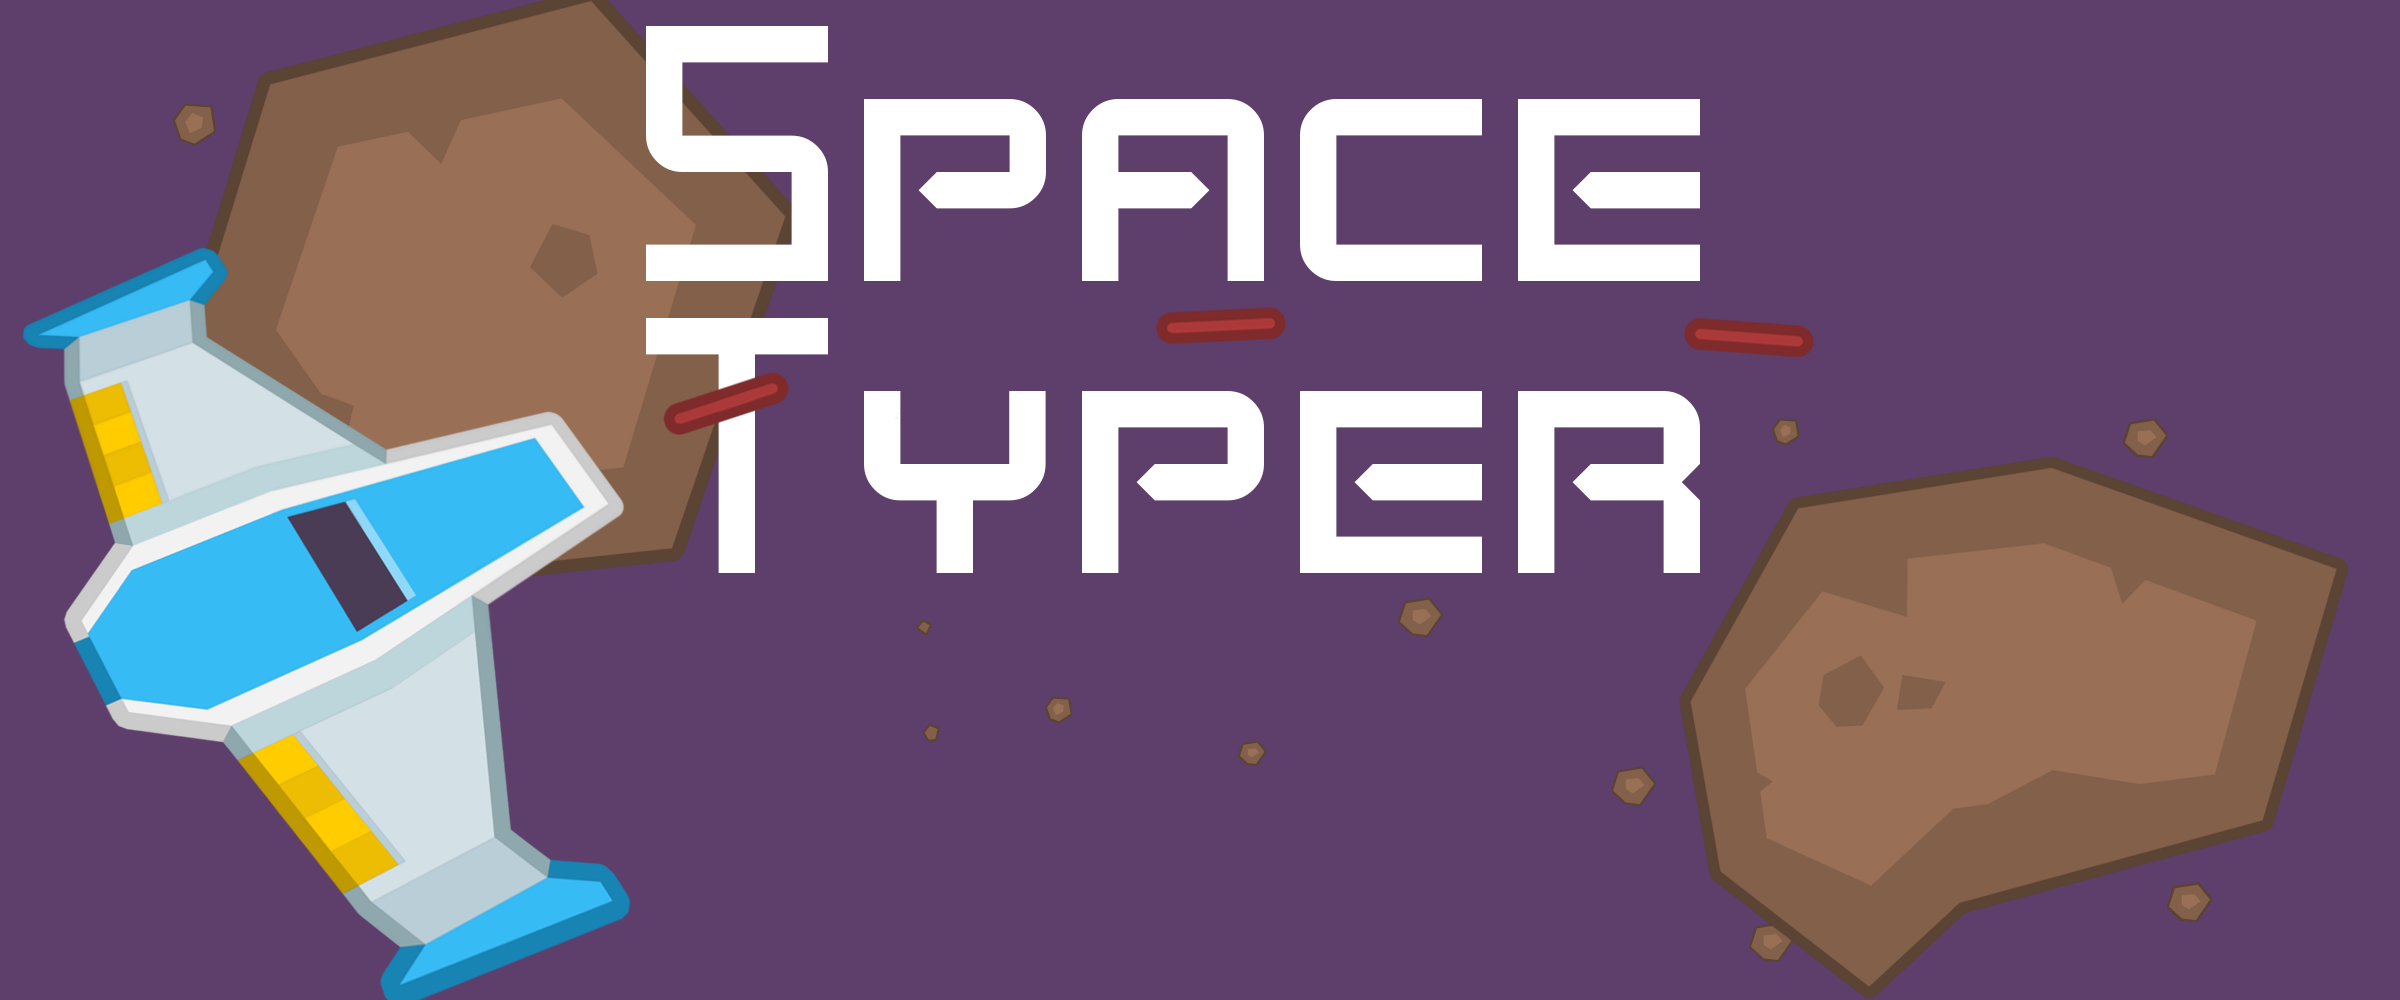 Space Typer